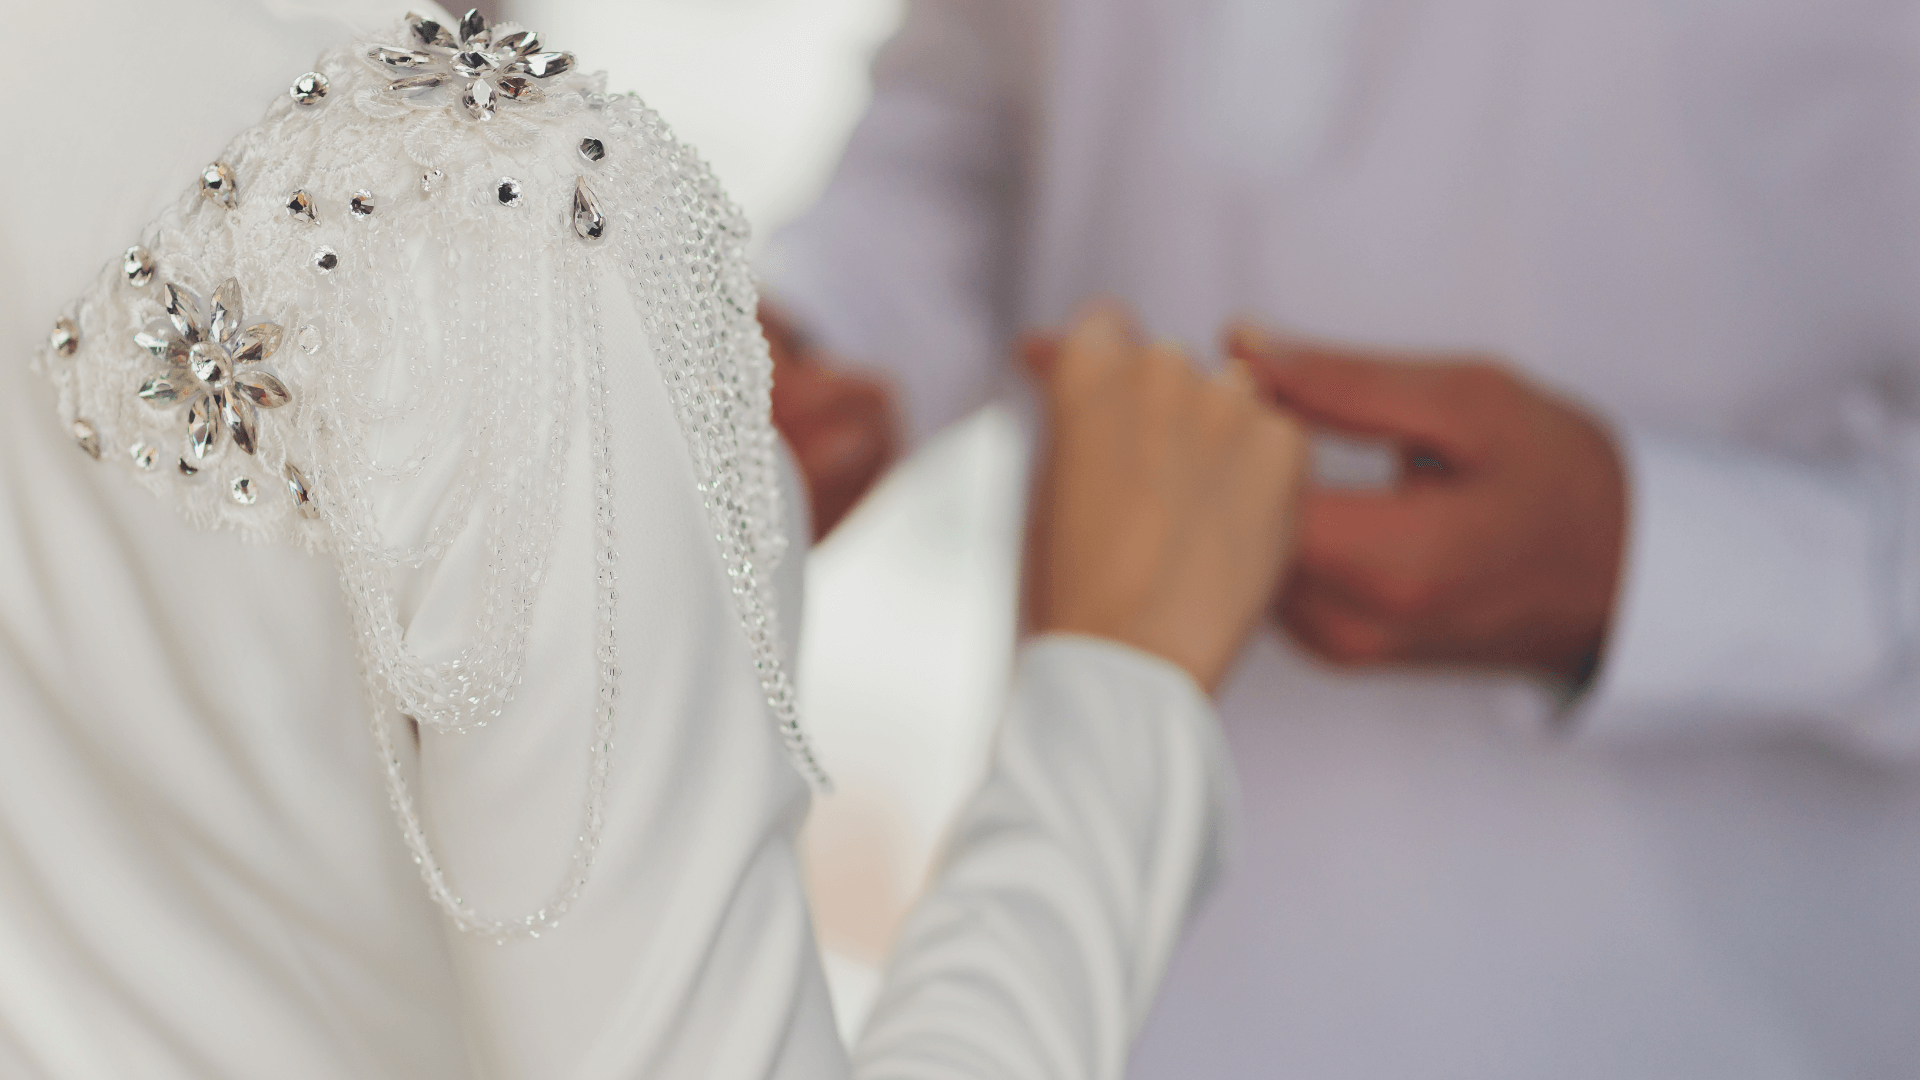 Mariage Musulman / Personnalisation Arabe / occasions